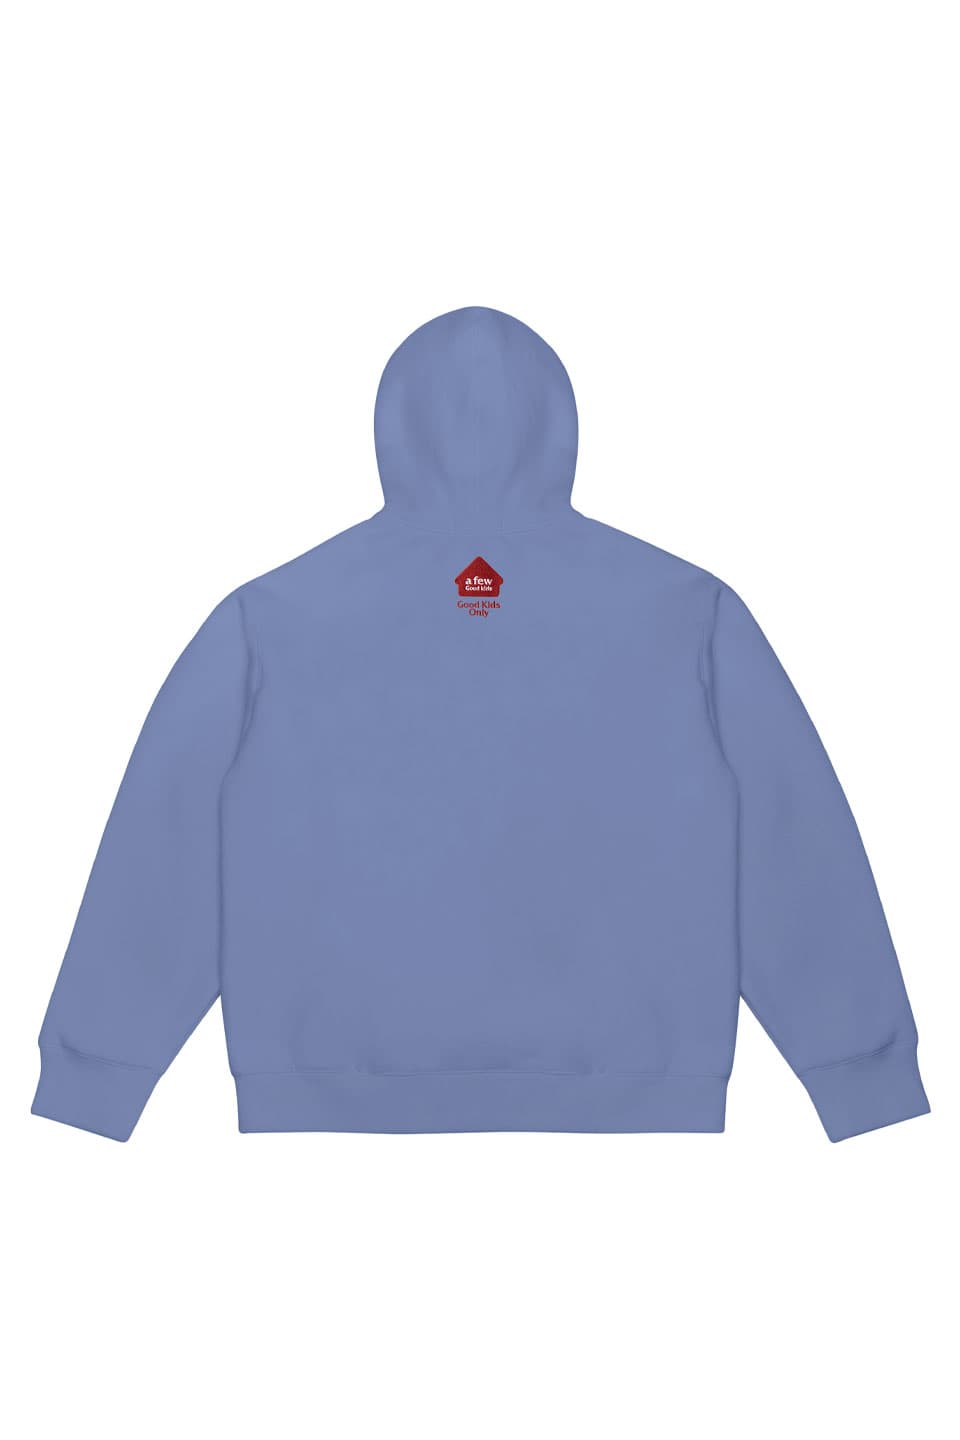 AFGK 重盛 supplier サプライヤー パーカー コラボ hoodie